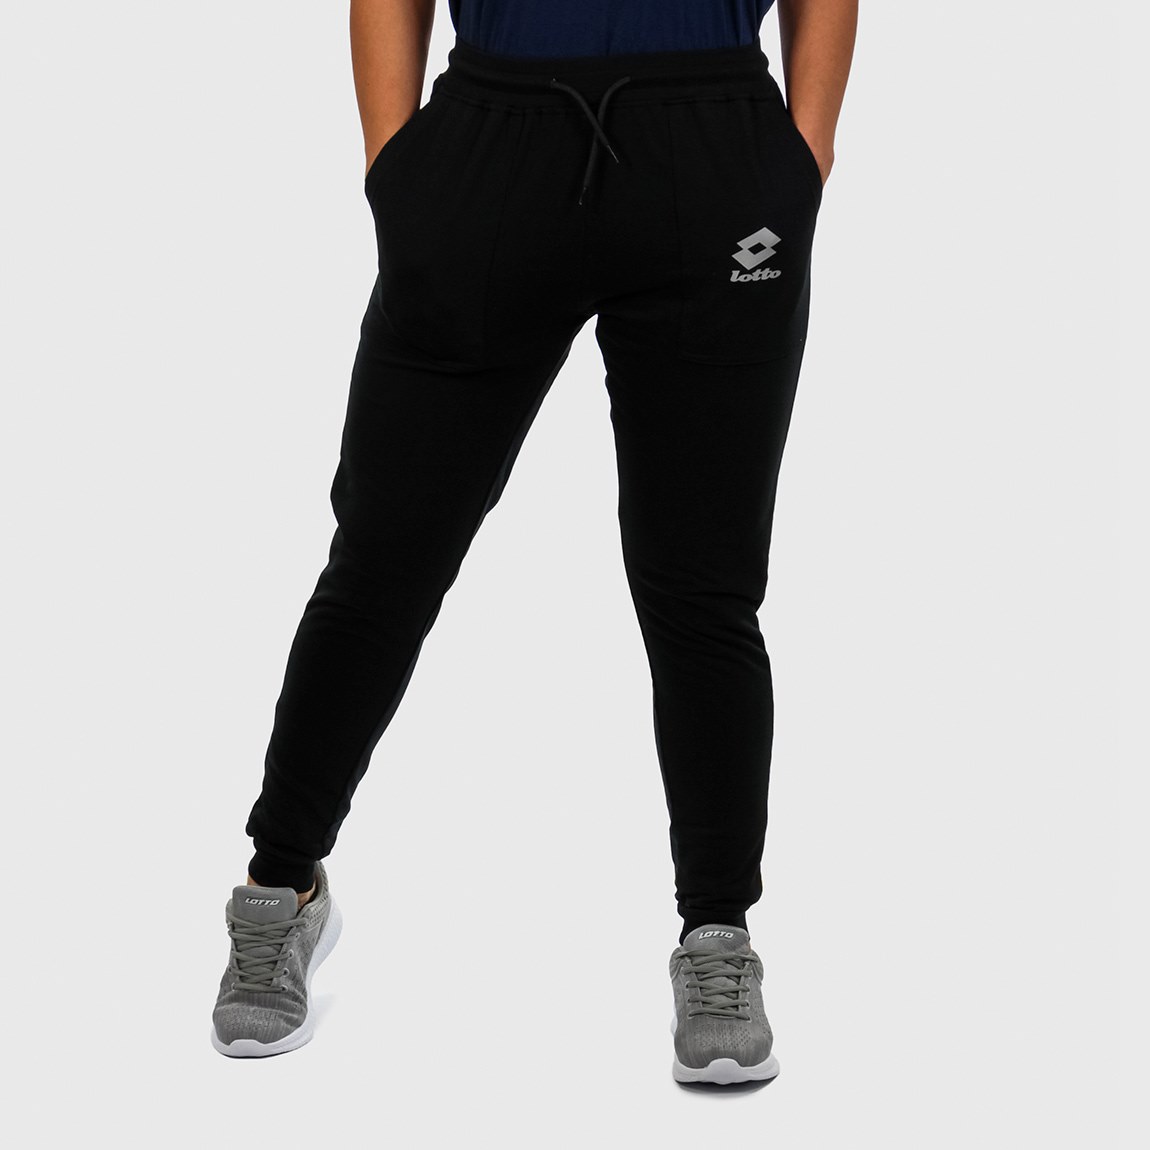 Lotto mujer pantalon leggins - negro